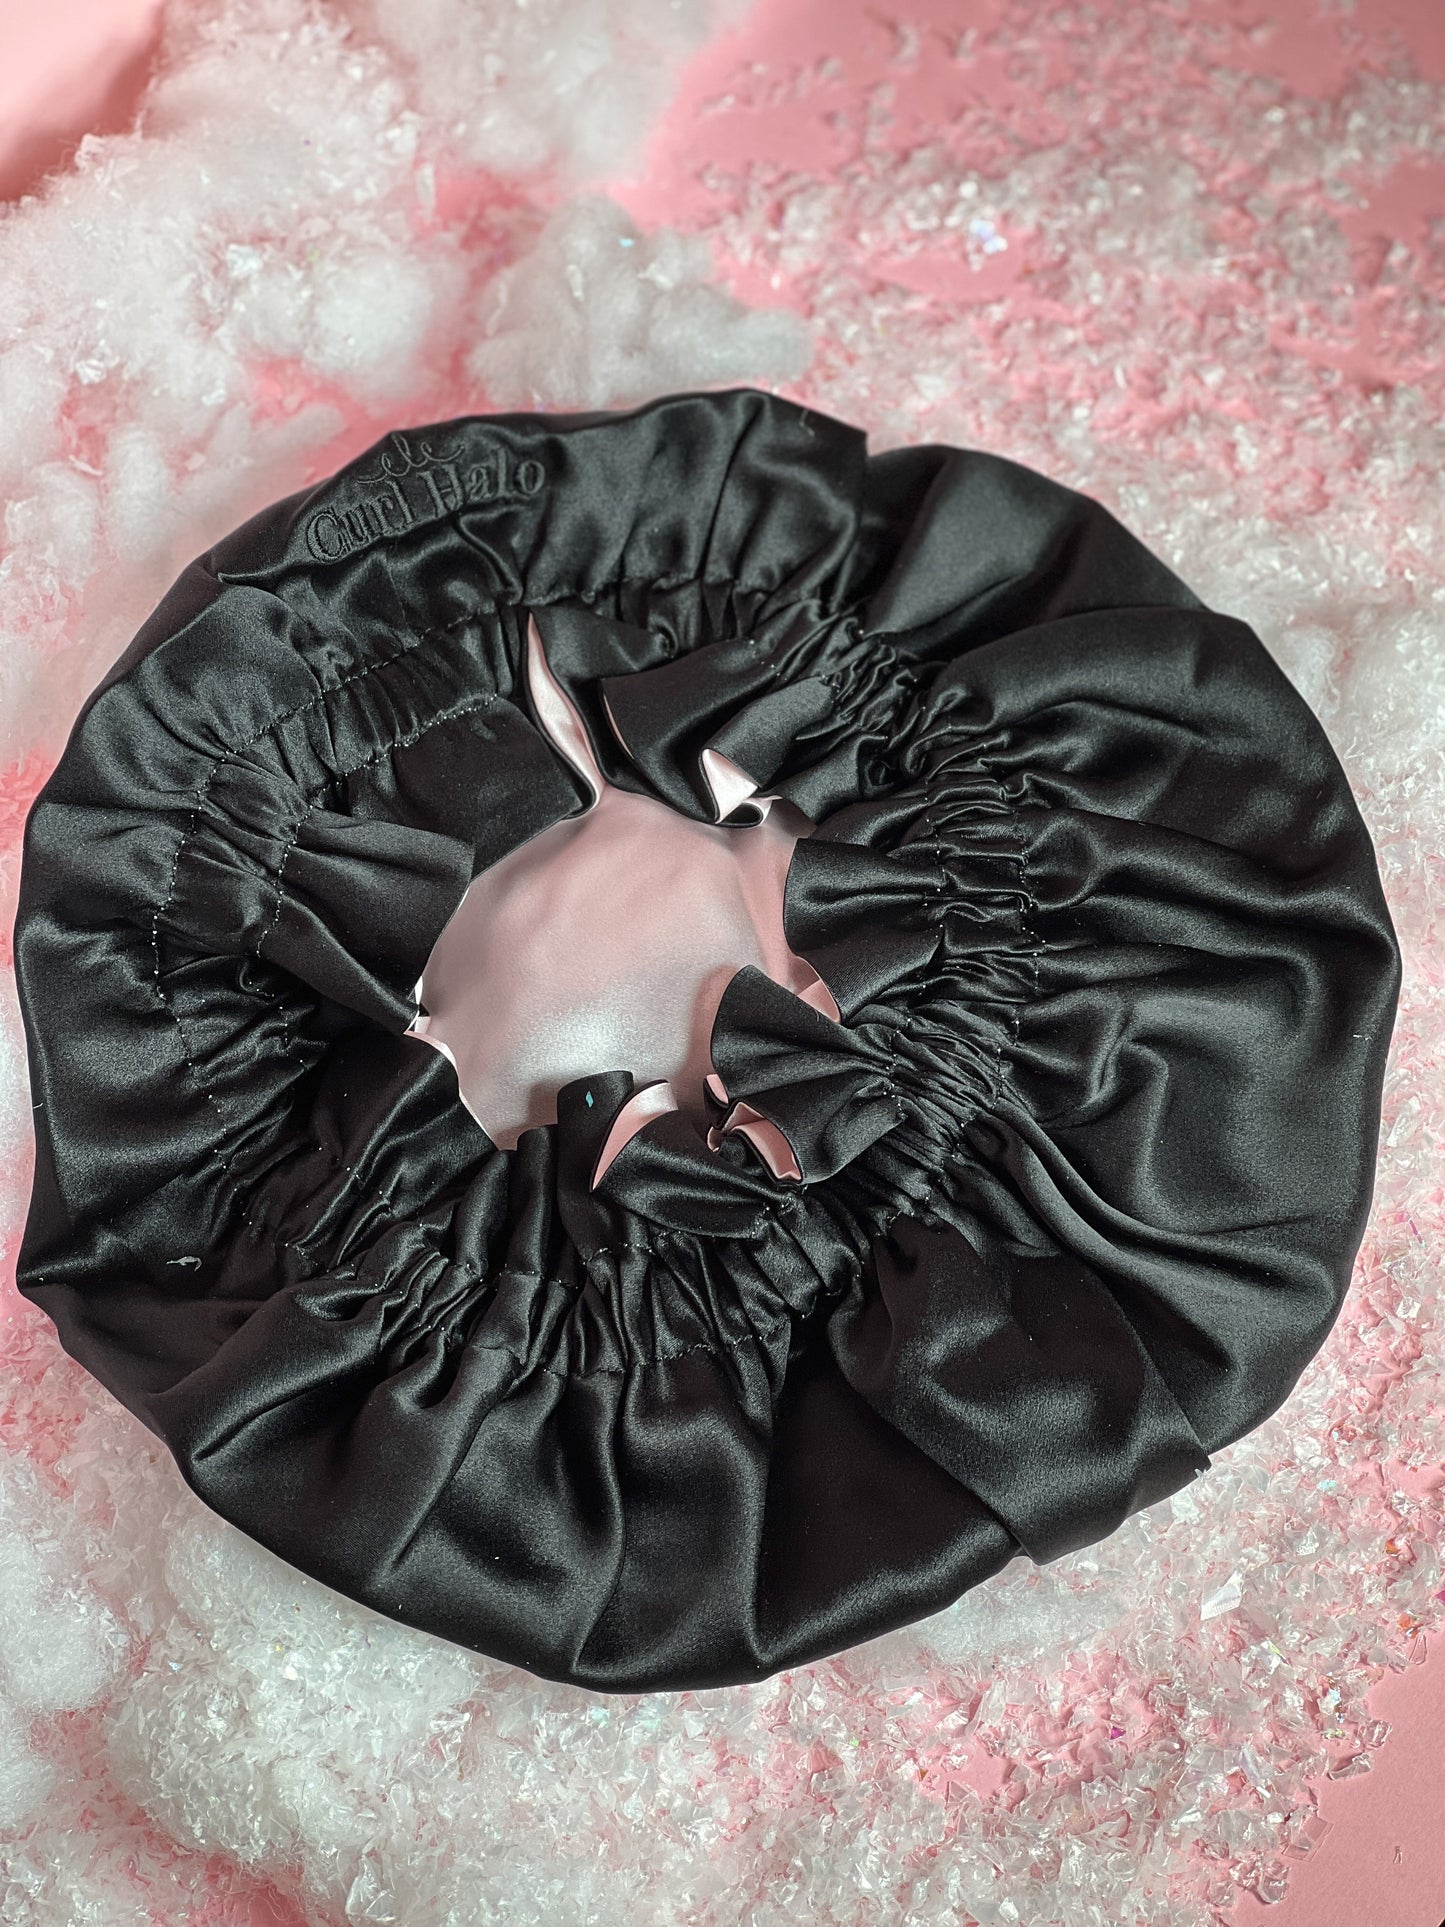 Curl Halo Heatless Curler and bonnet  - Comfortable sleep set